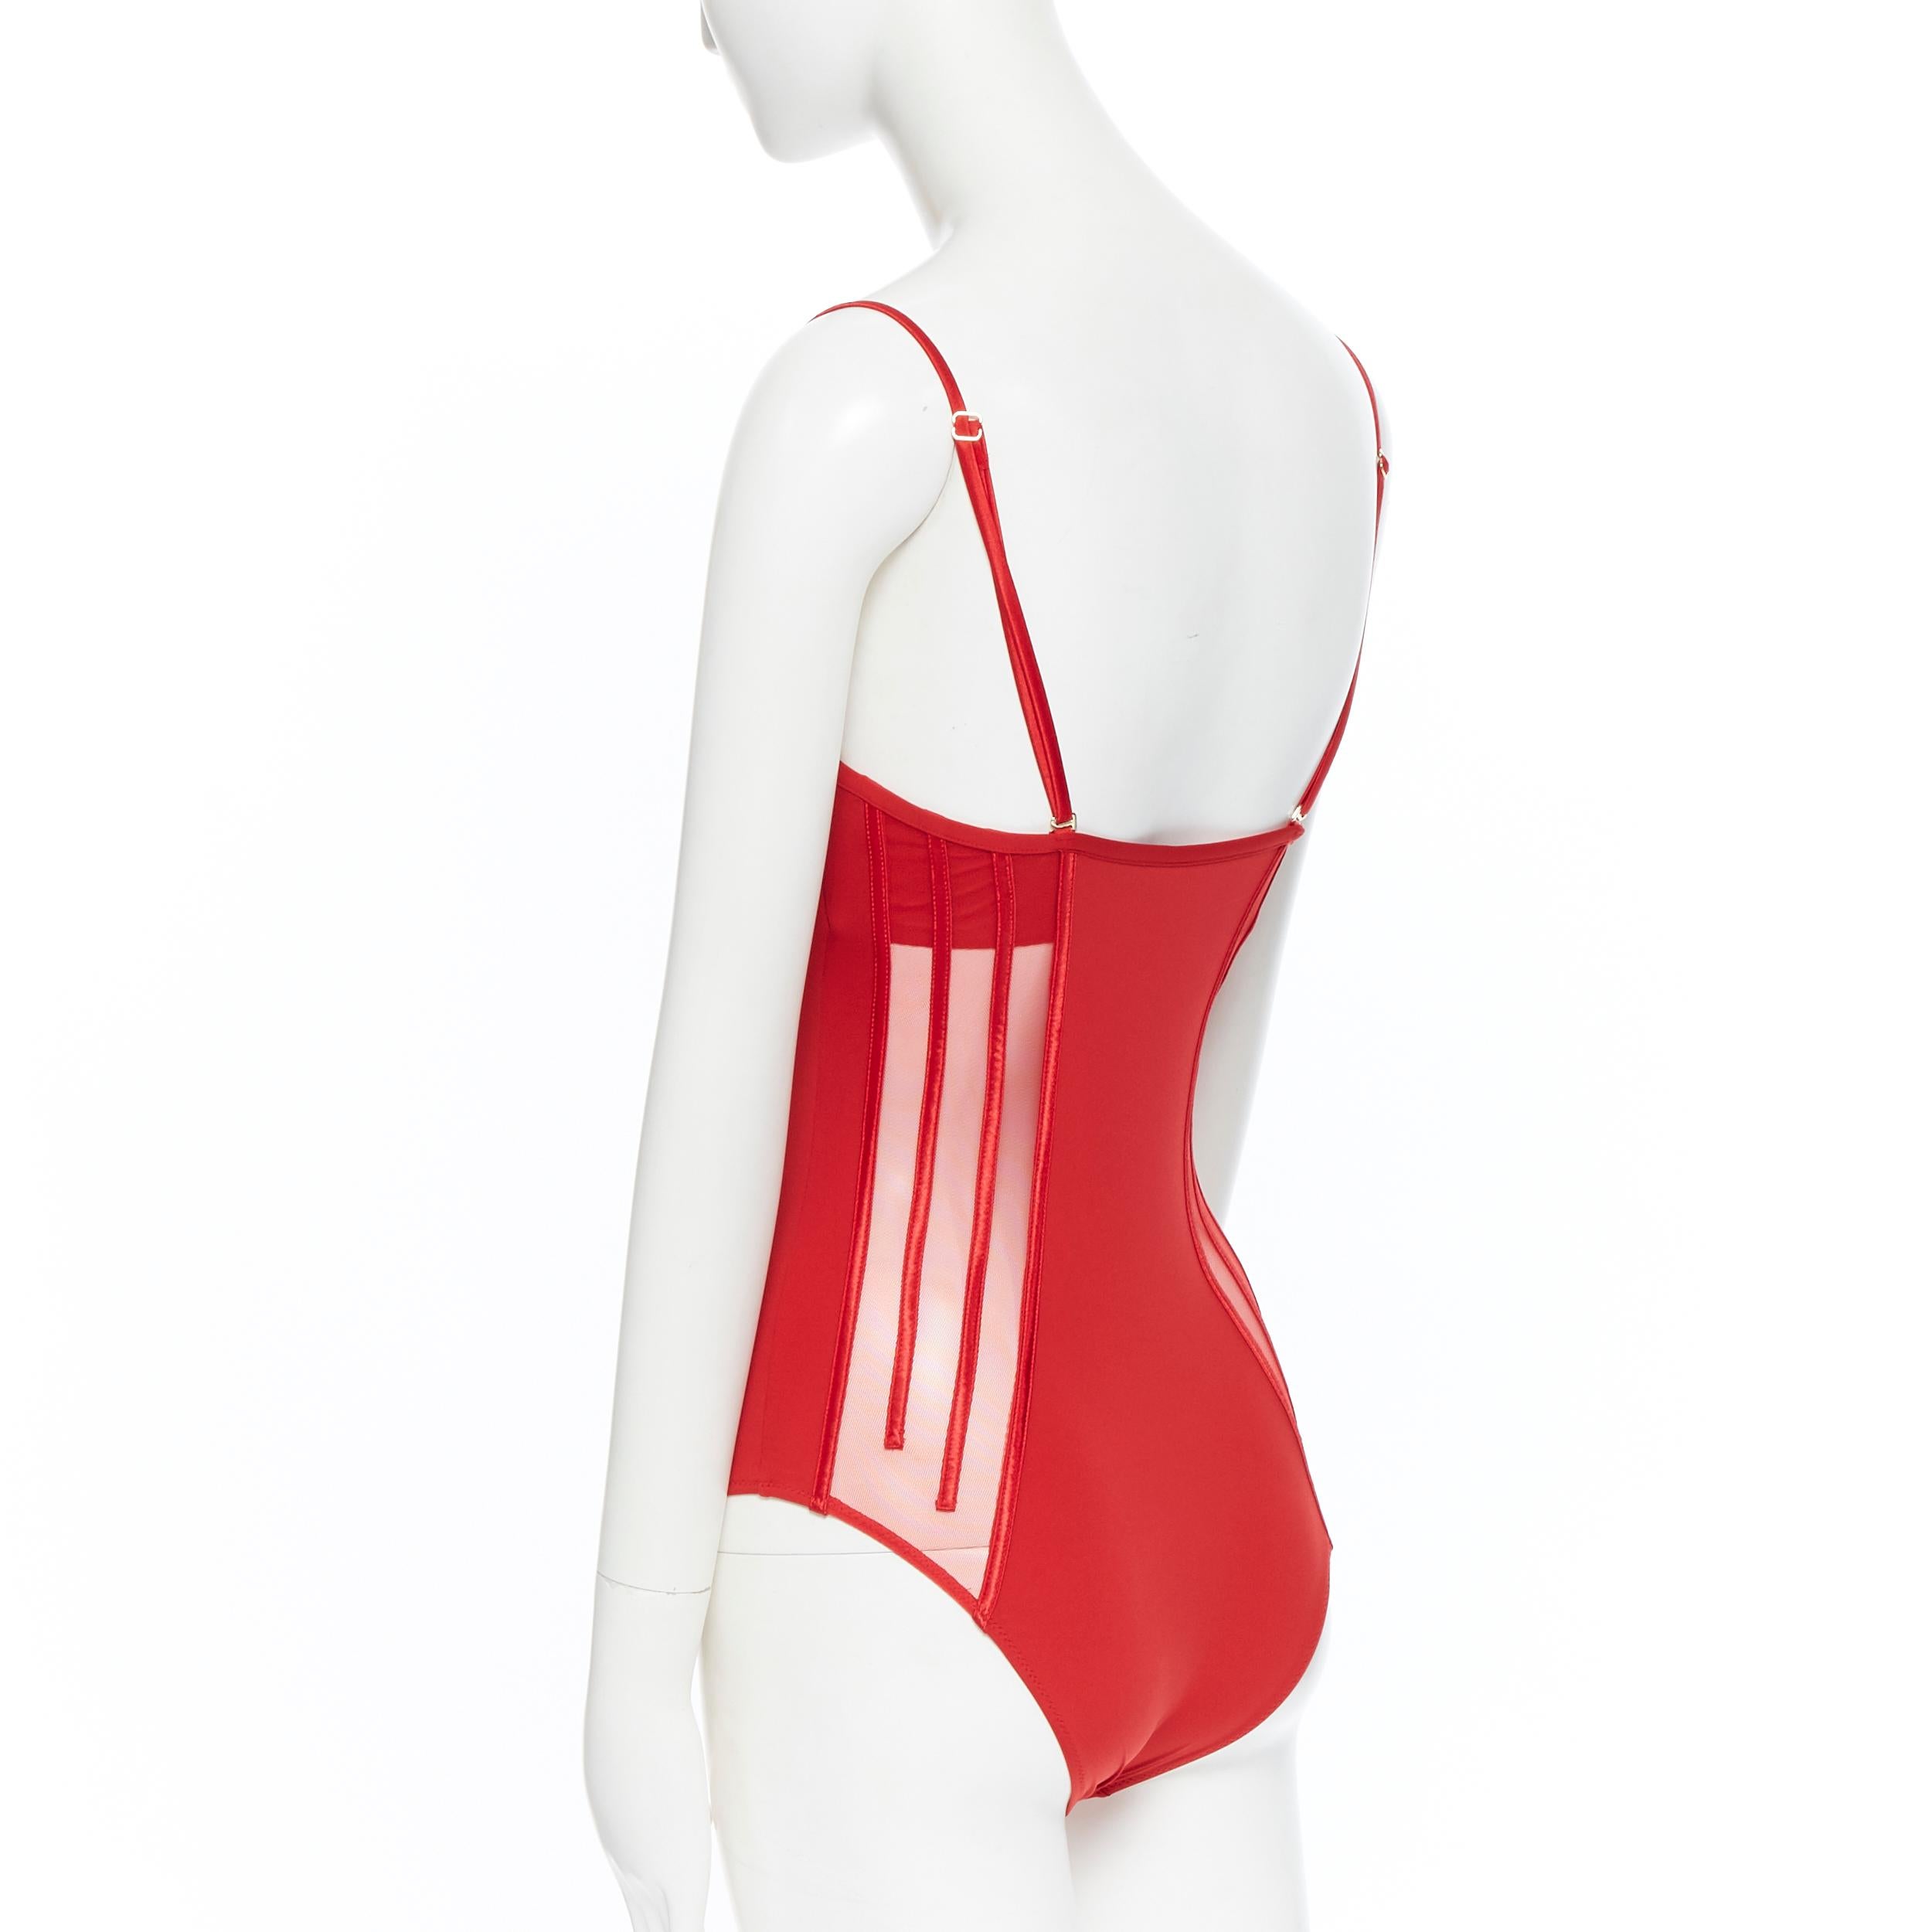 new LA PERLA Graphique Couture red boned sheer body monokini swimsuit IT44B M 1